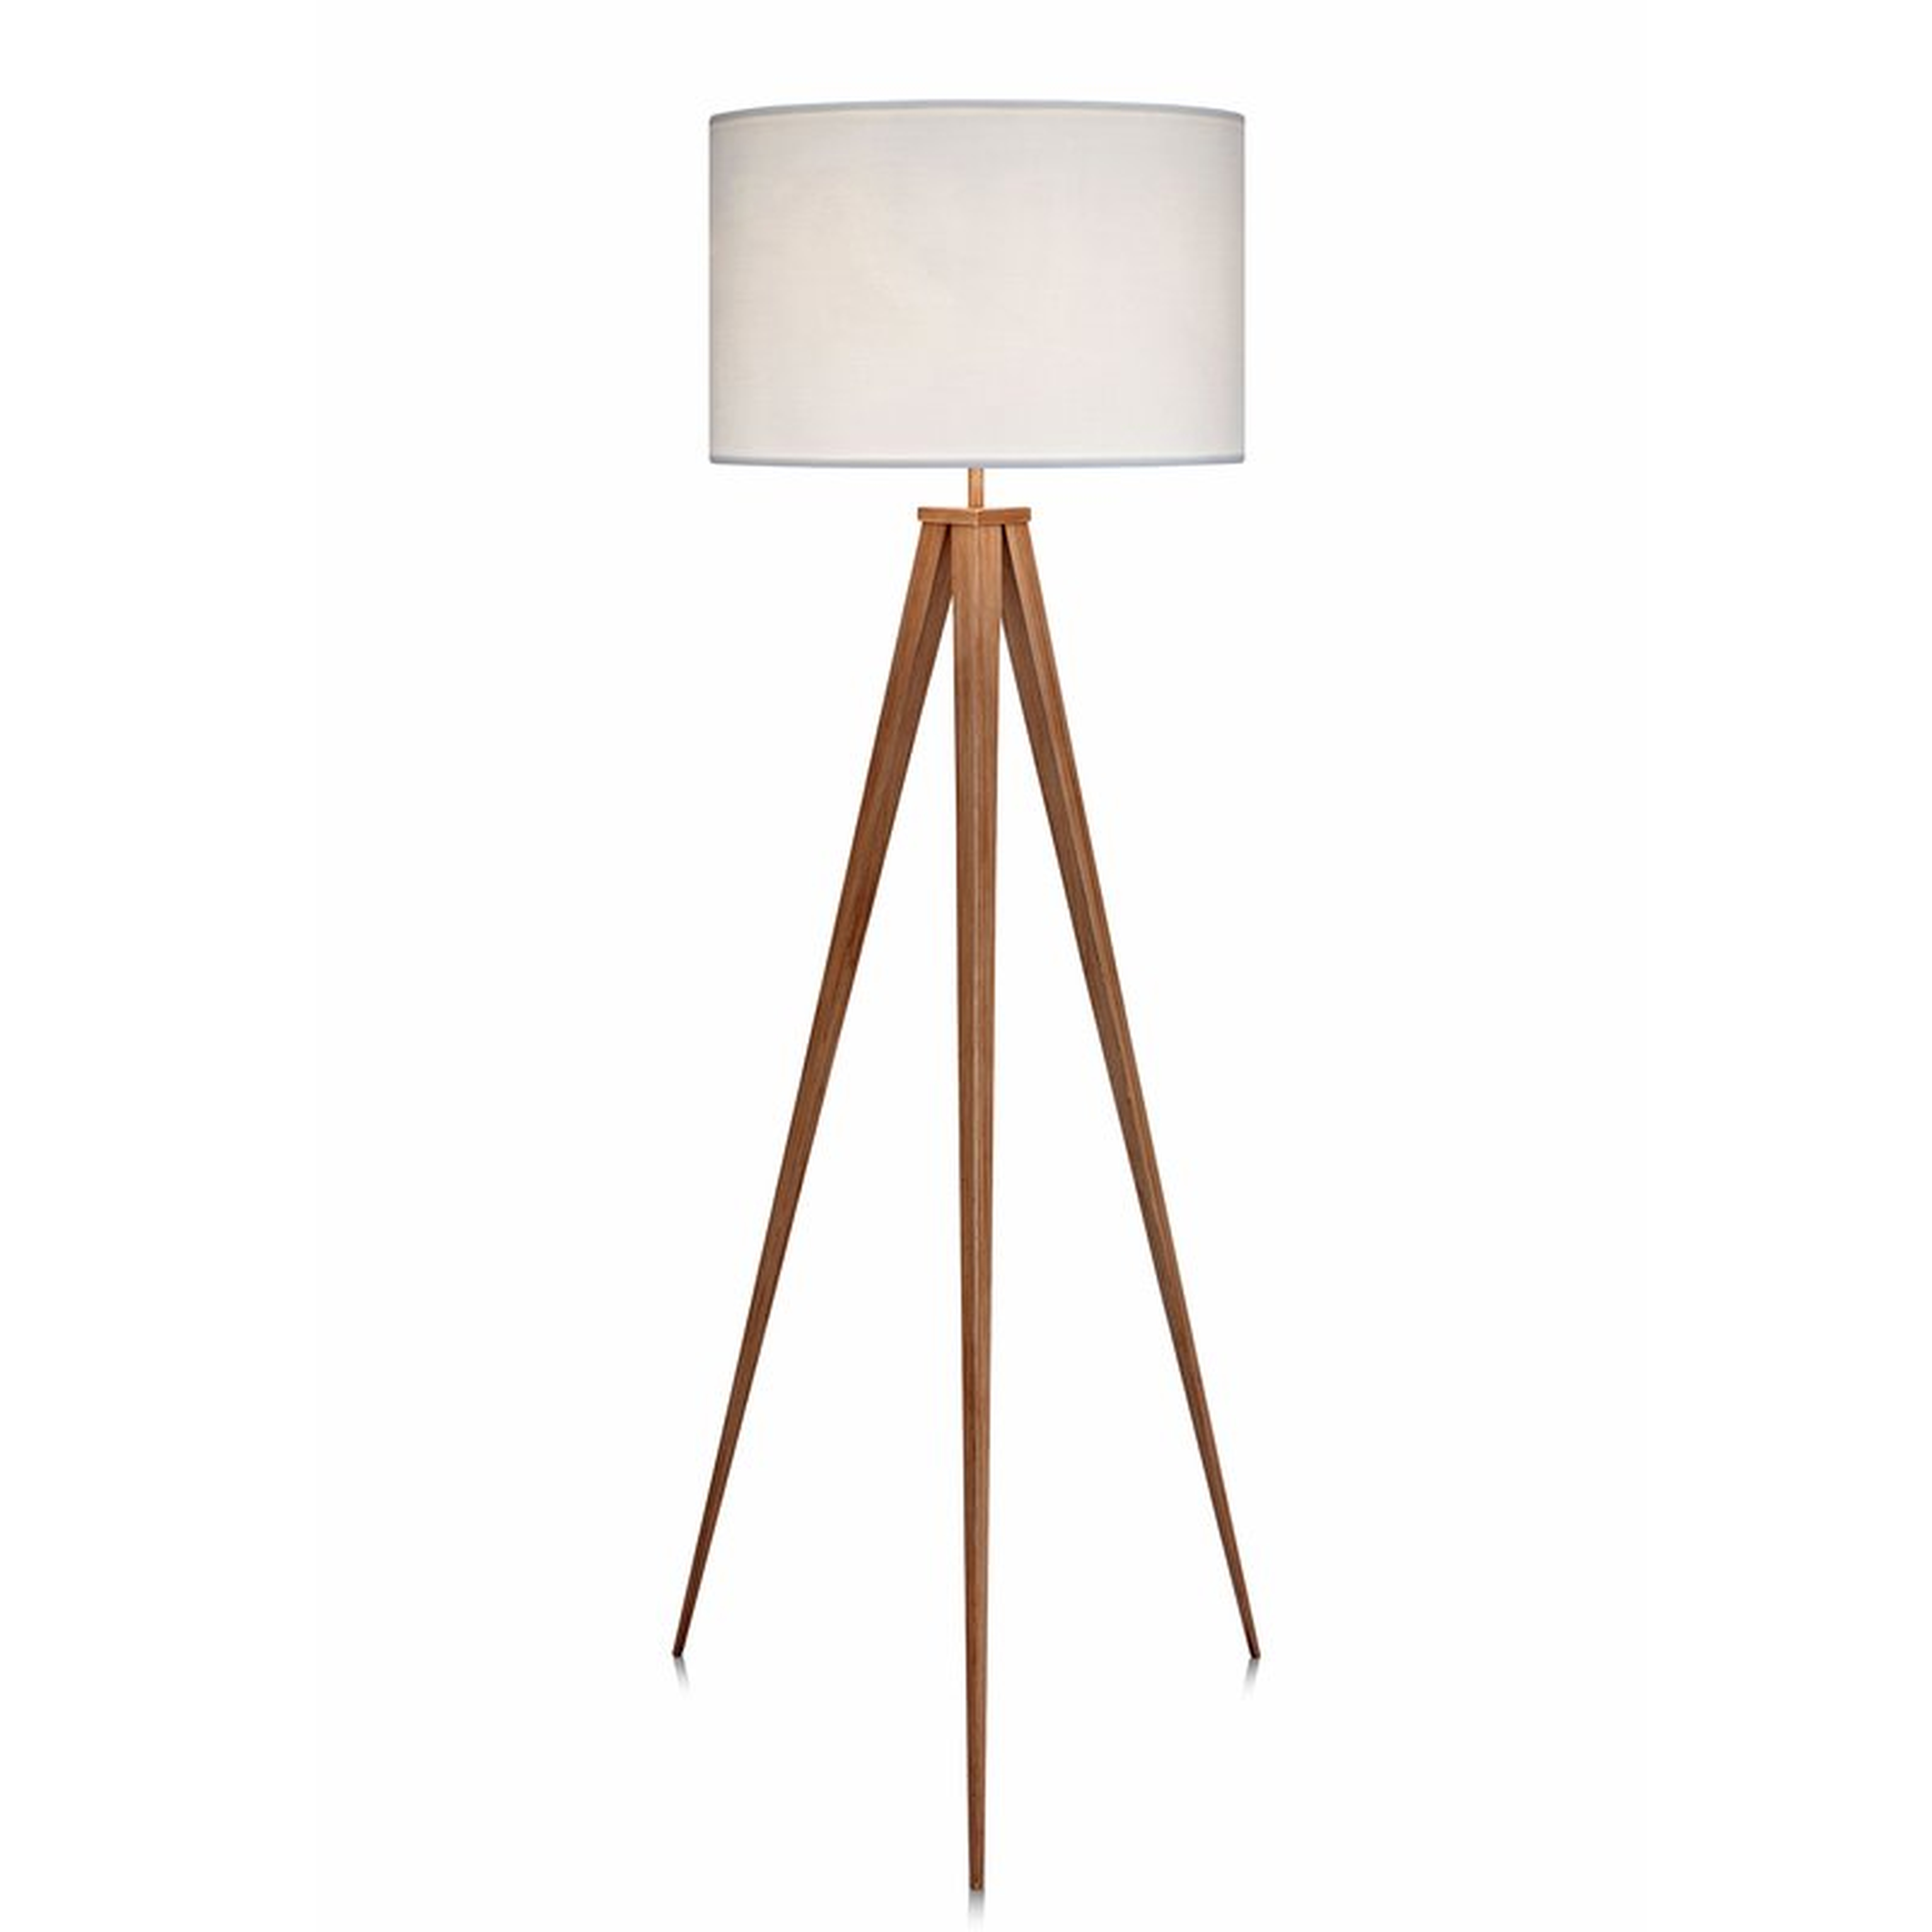 Cardone 62" Tripod Floor Lamp, White & Tan - Wayfair